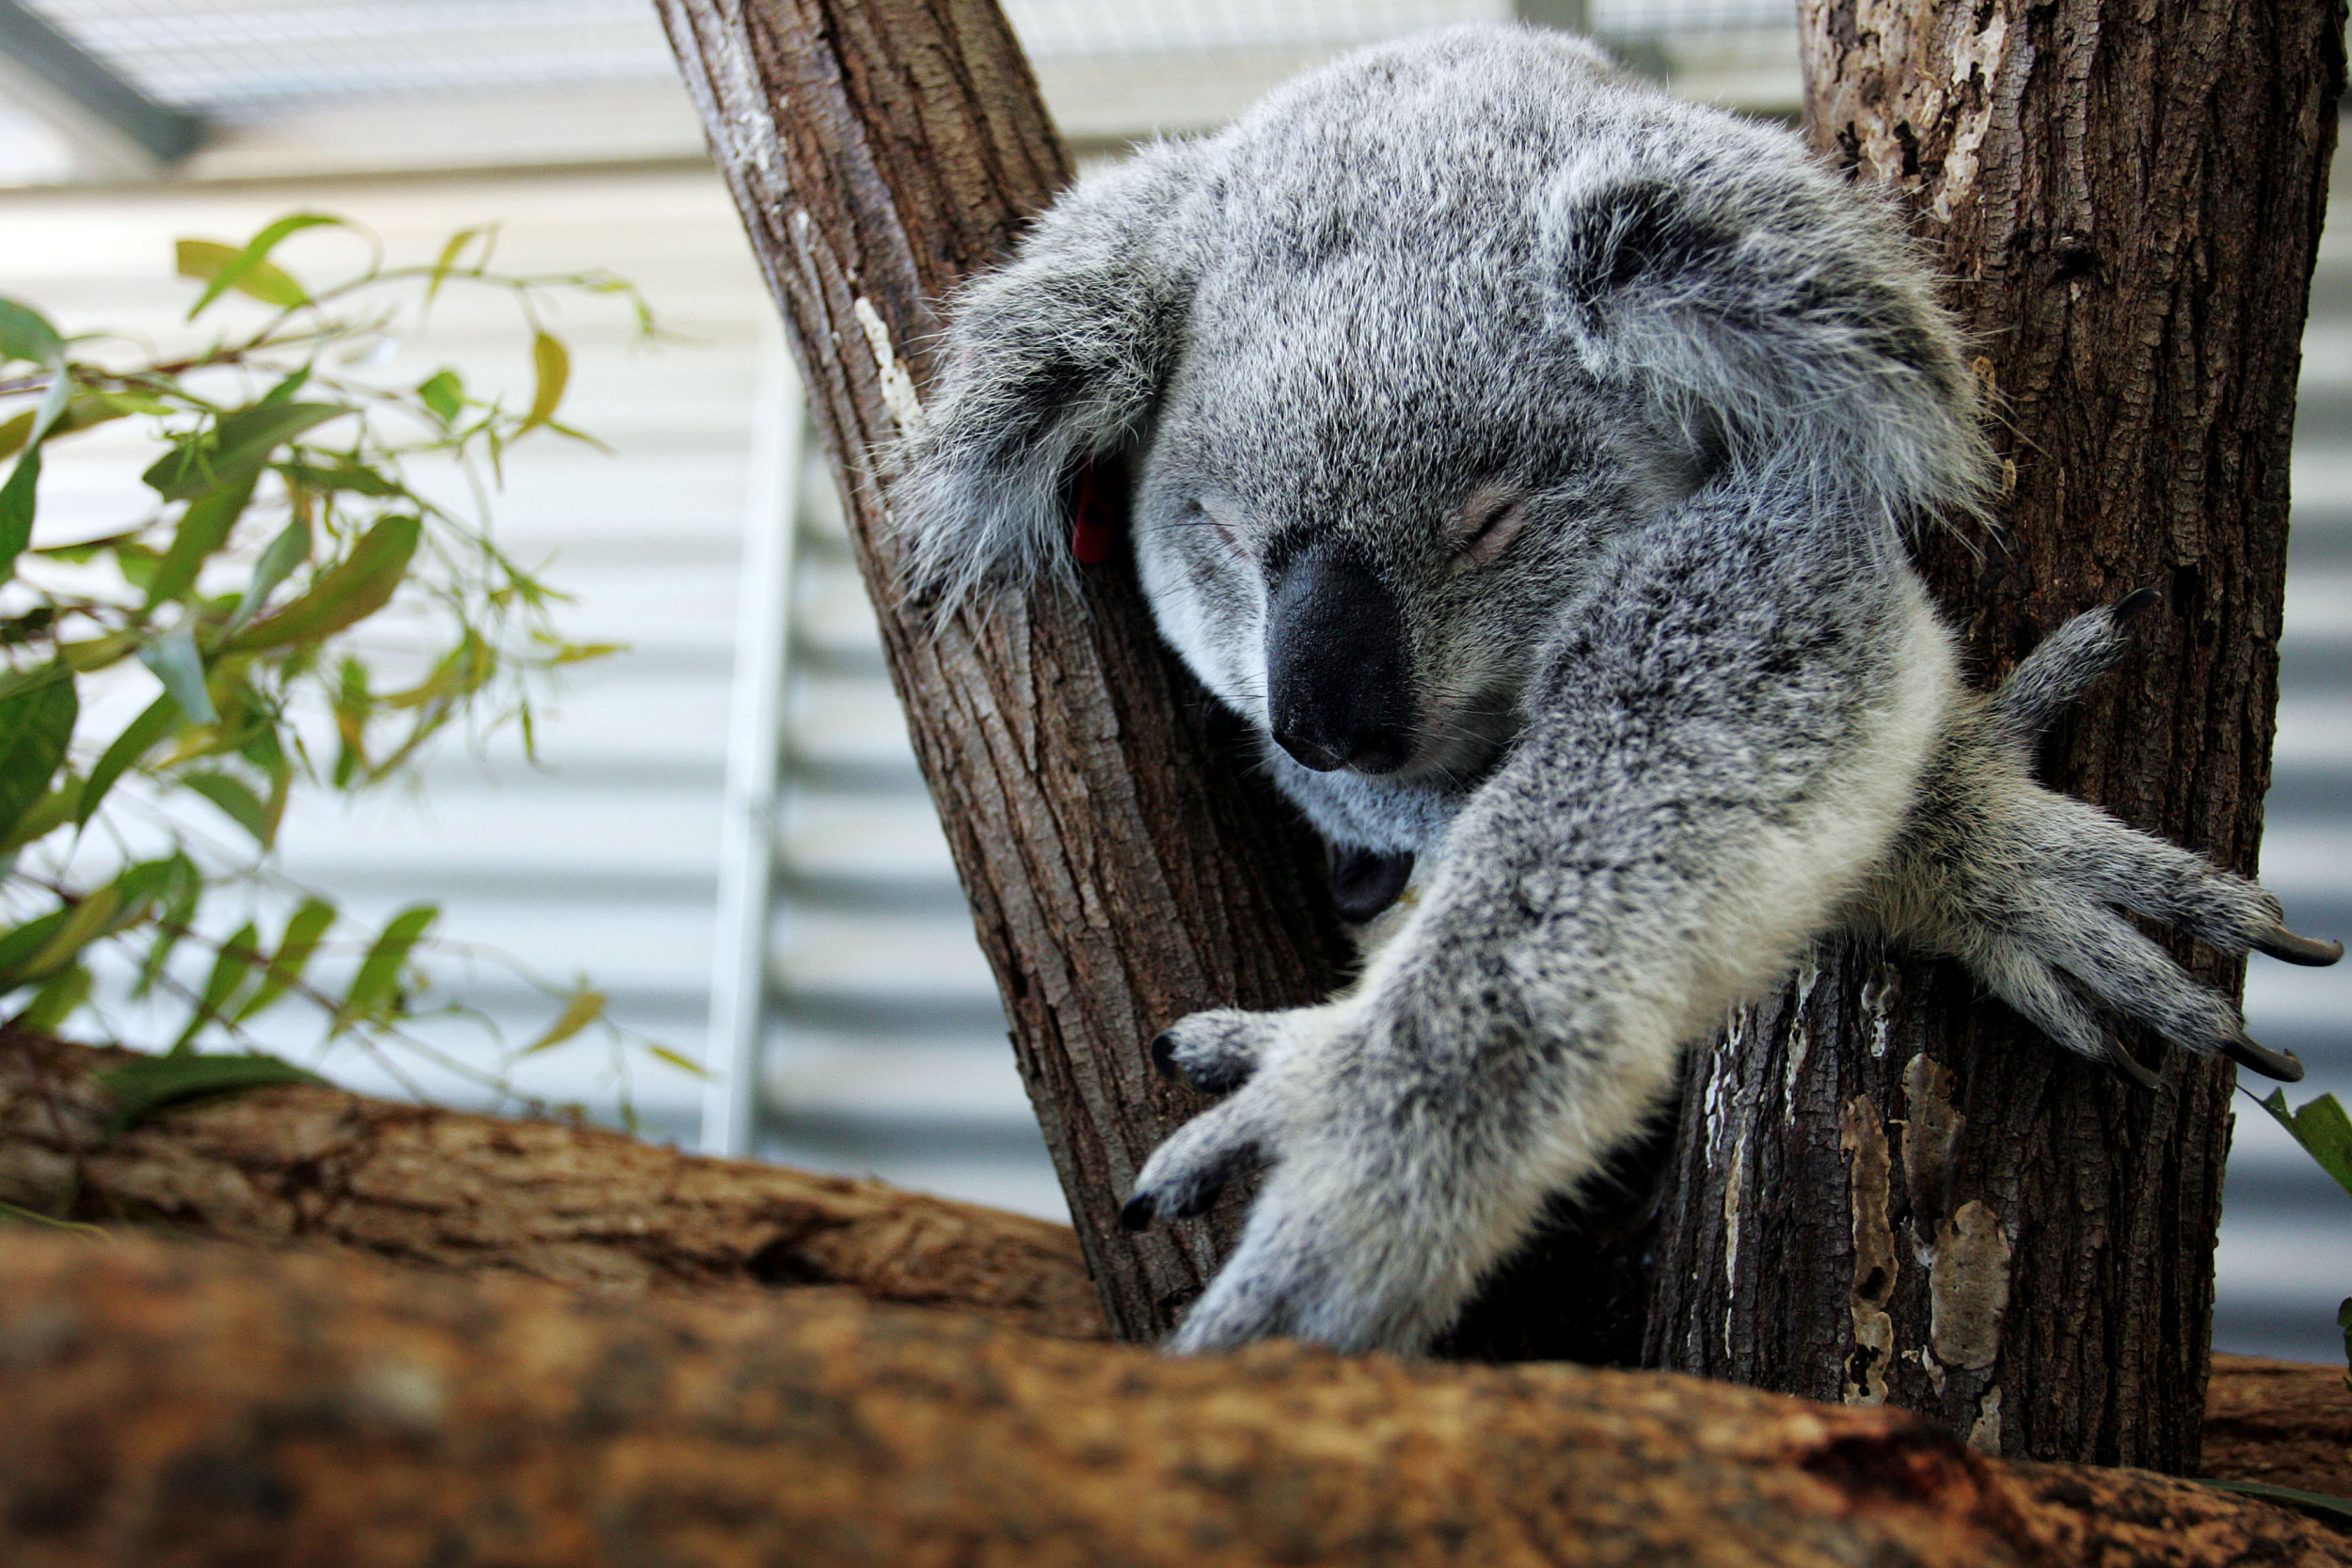 Scientists Identify 'Last Chlamydia-free' Koala Population